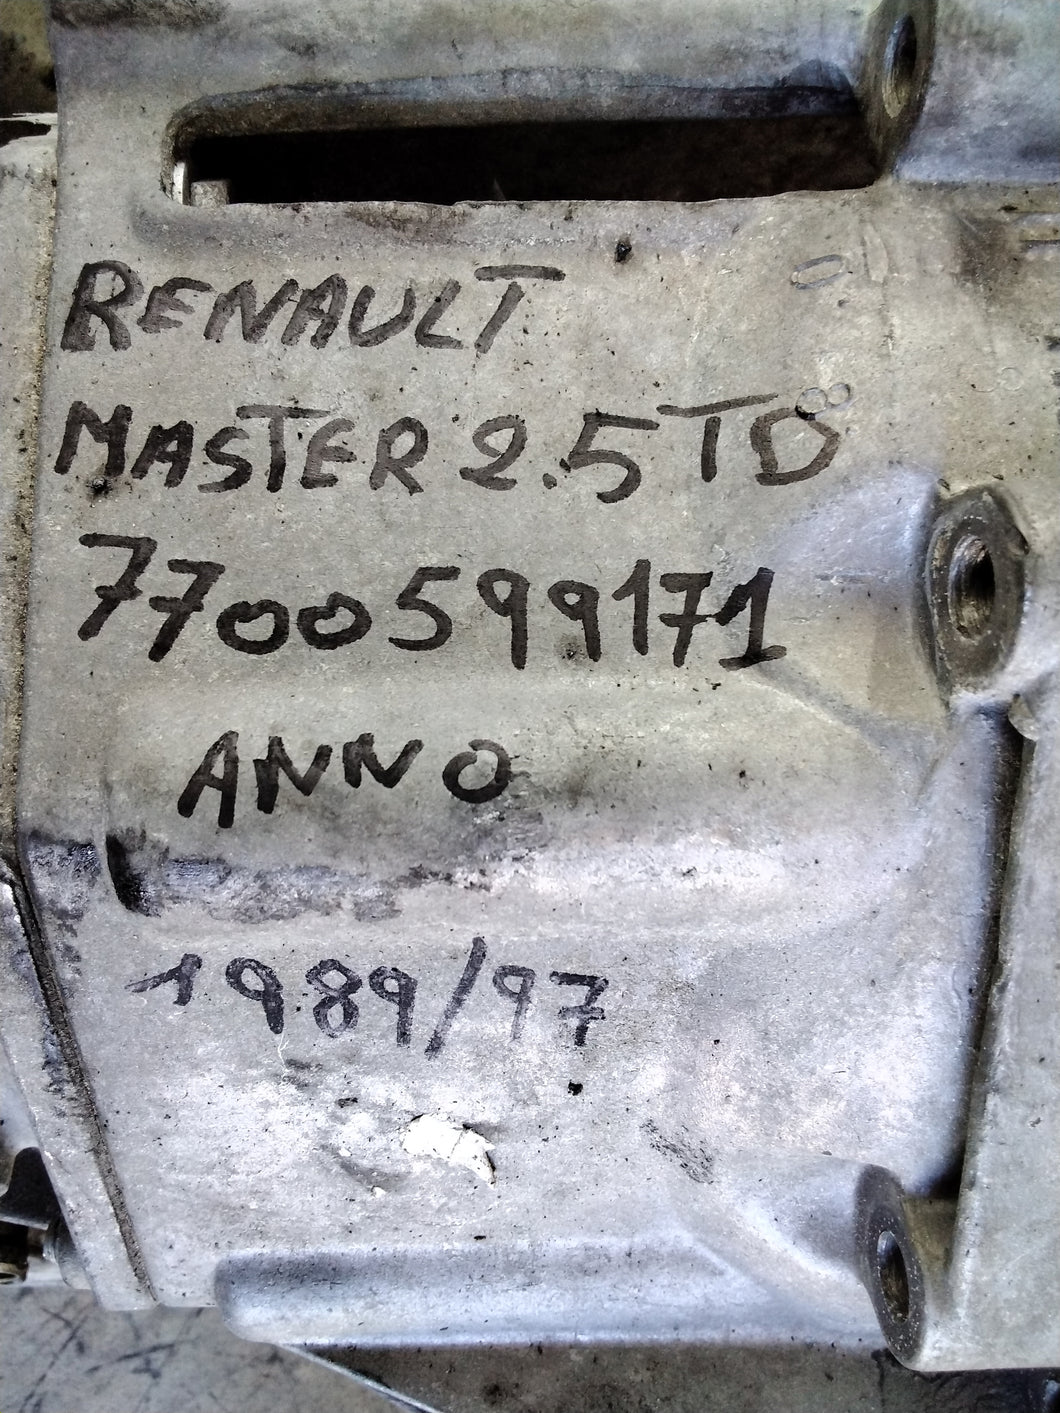 Cambio renault master 2.5 TD anno: (1989/1997) codice: 7700599171 (sf2)